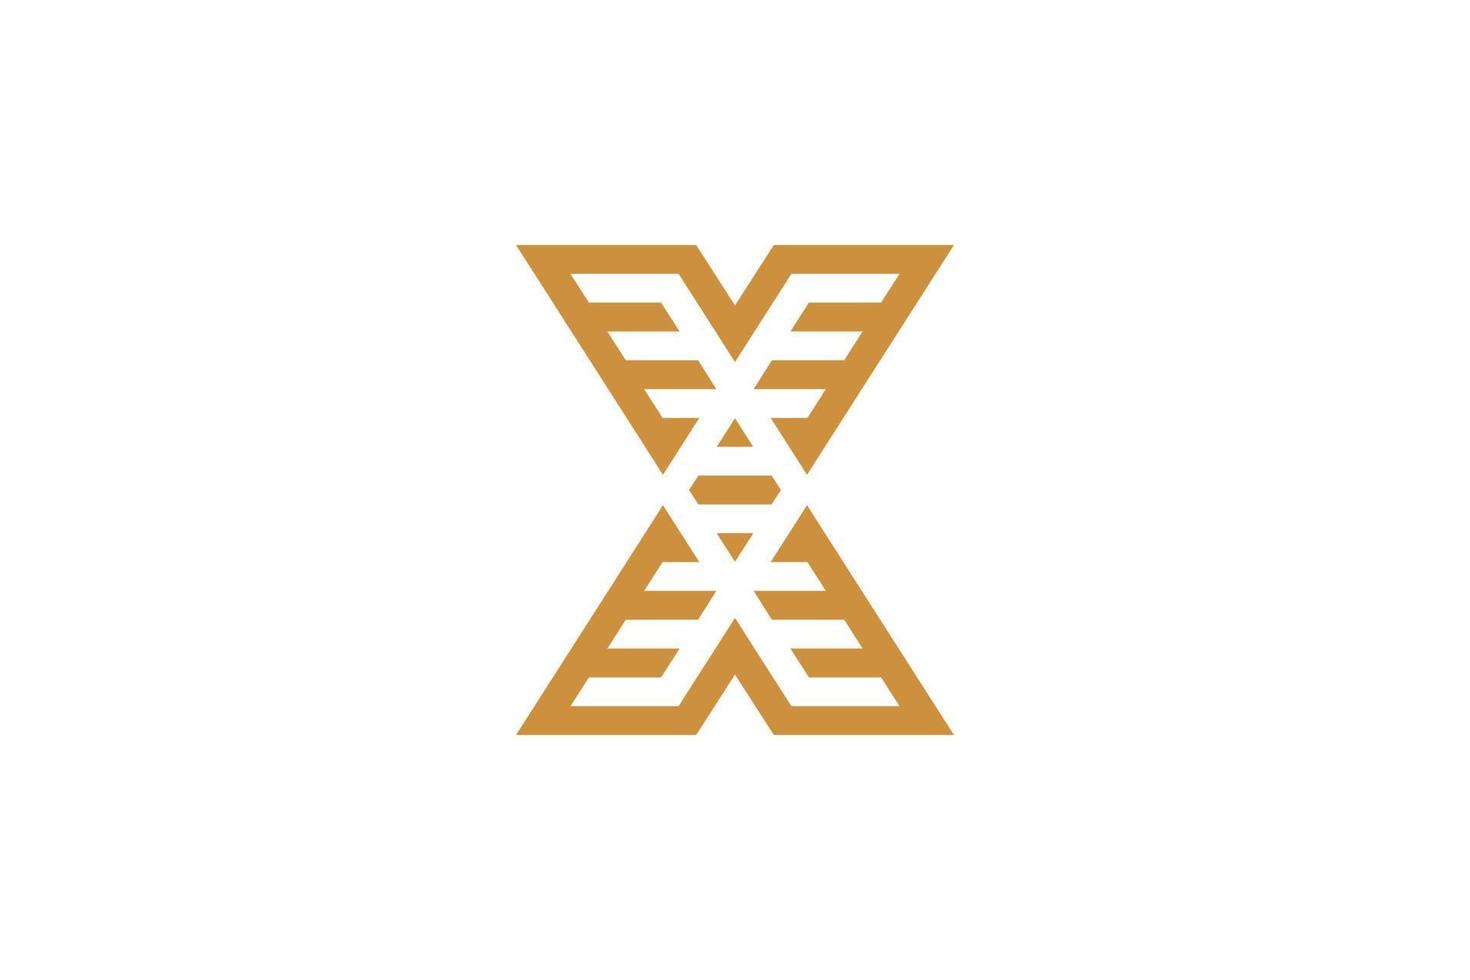 Simple Letter X Monoline Logo vector